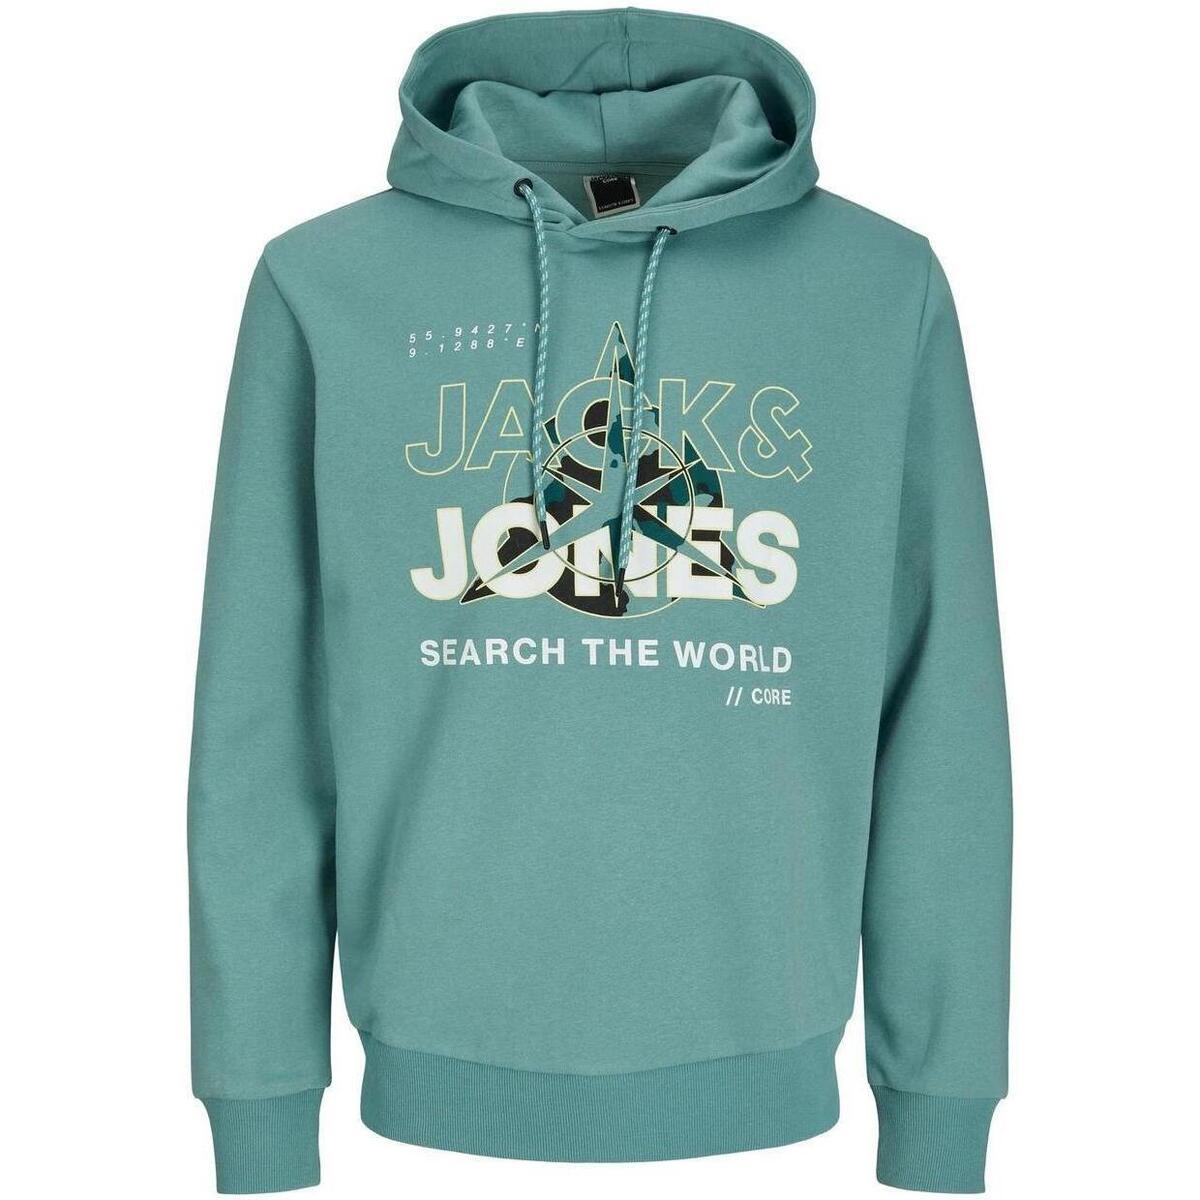 textil Herre Sweatshirts Jack & Jones  Grøn